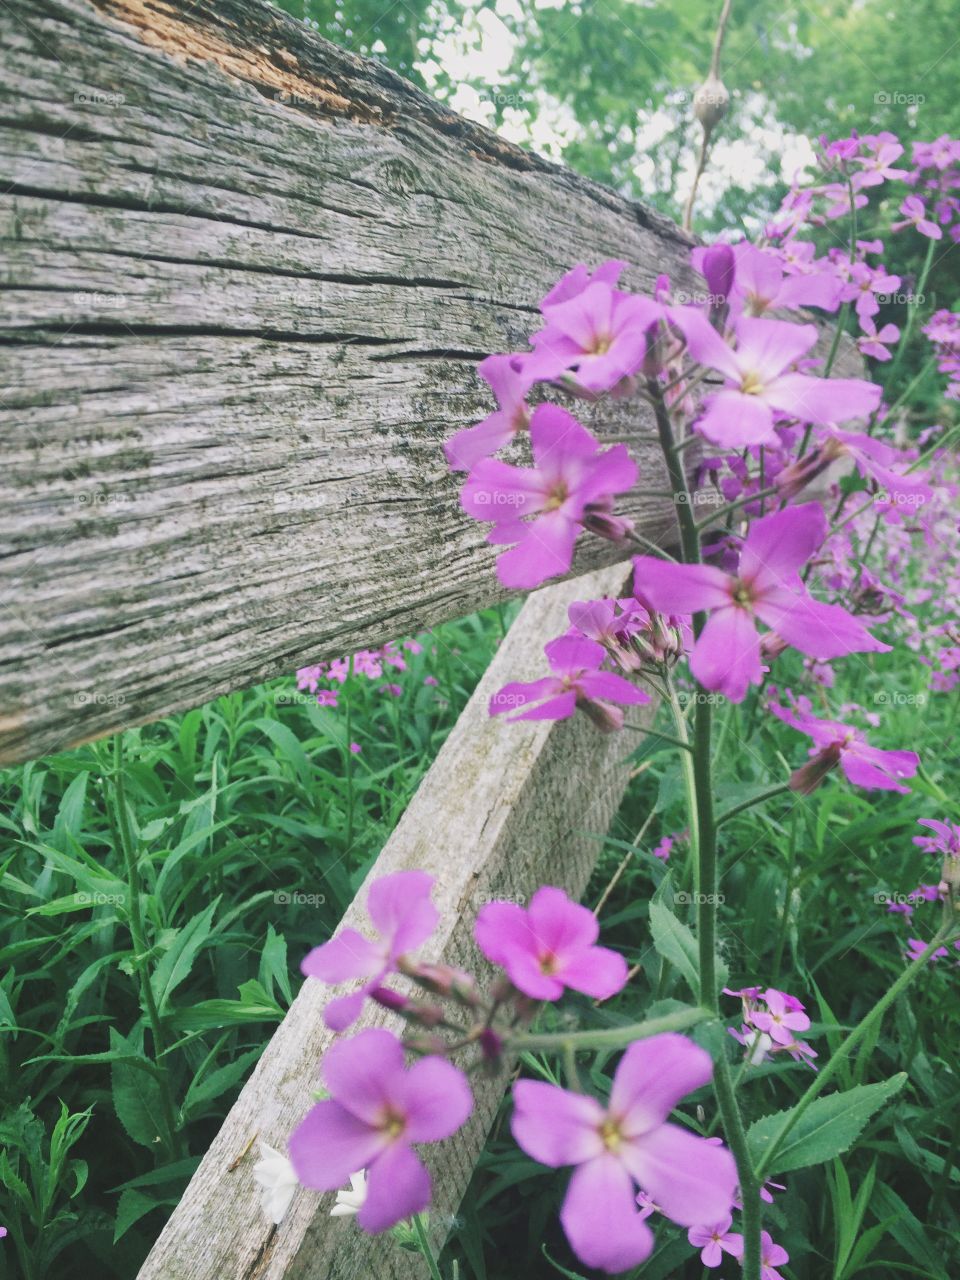 Purple flowers along a wooden fence